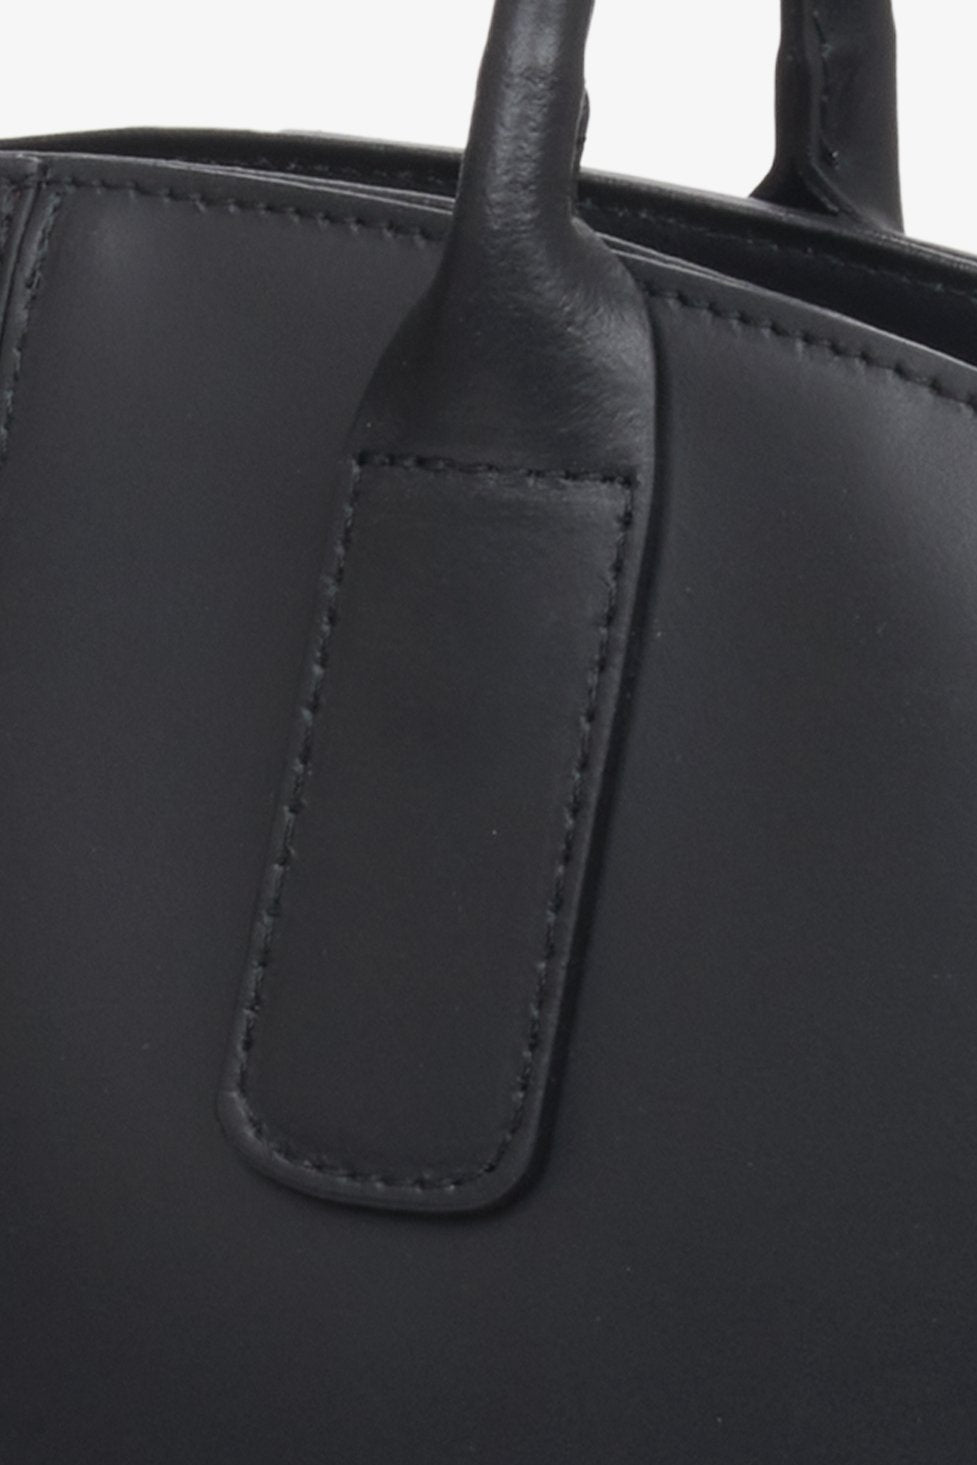 Women's Black Shopper Bag made of Genuine Italian Leather - details.